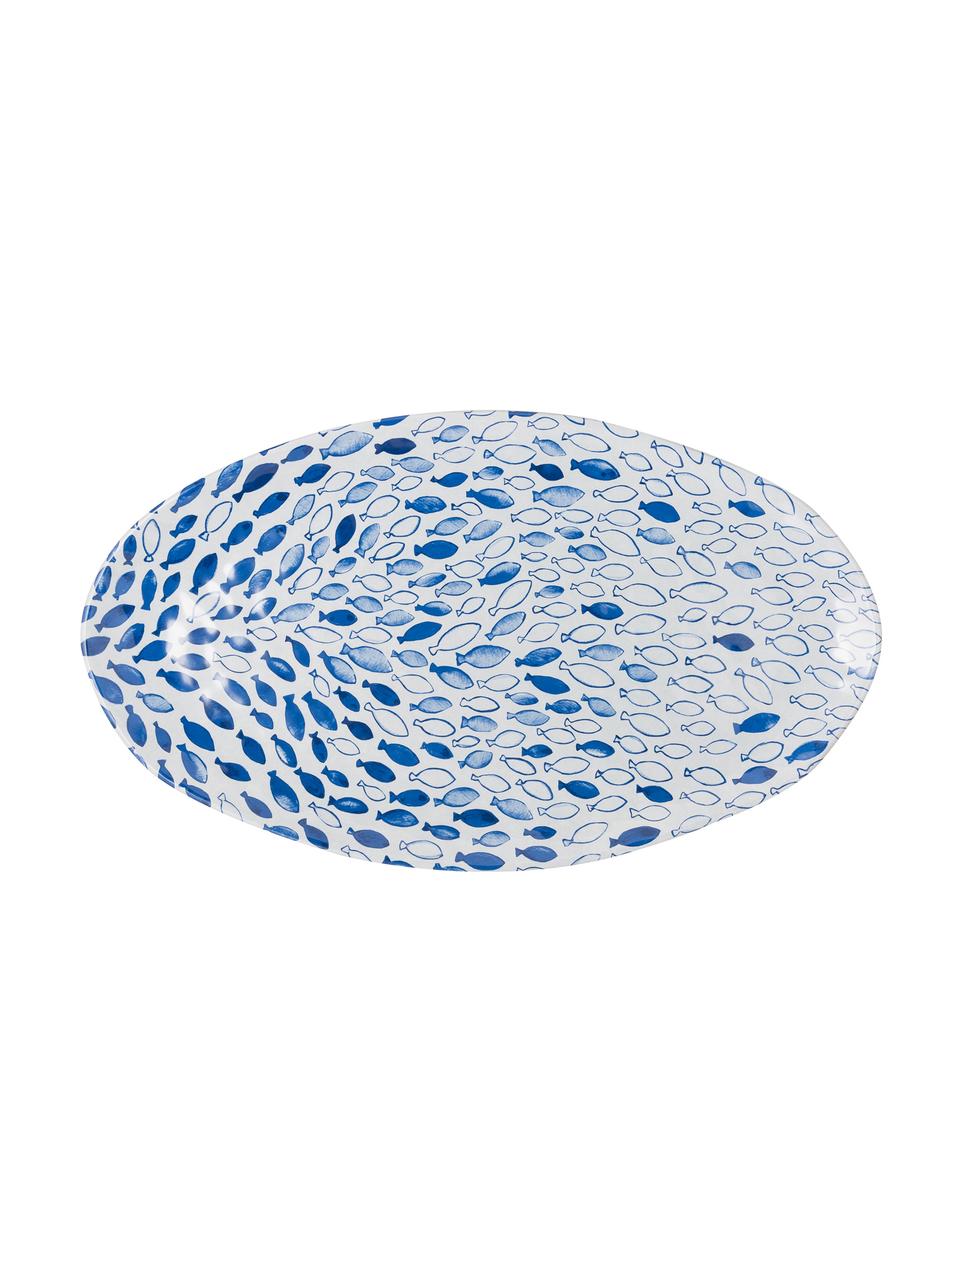 Fuente de melamina Vassoio, Melamina, Azul, blanco, L 52 x An 30 cm